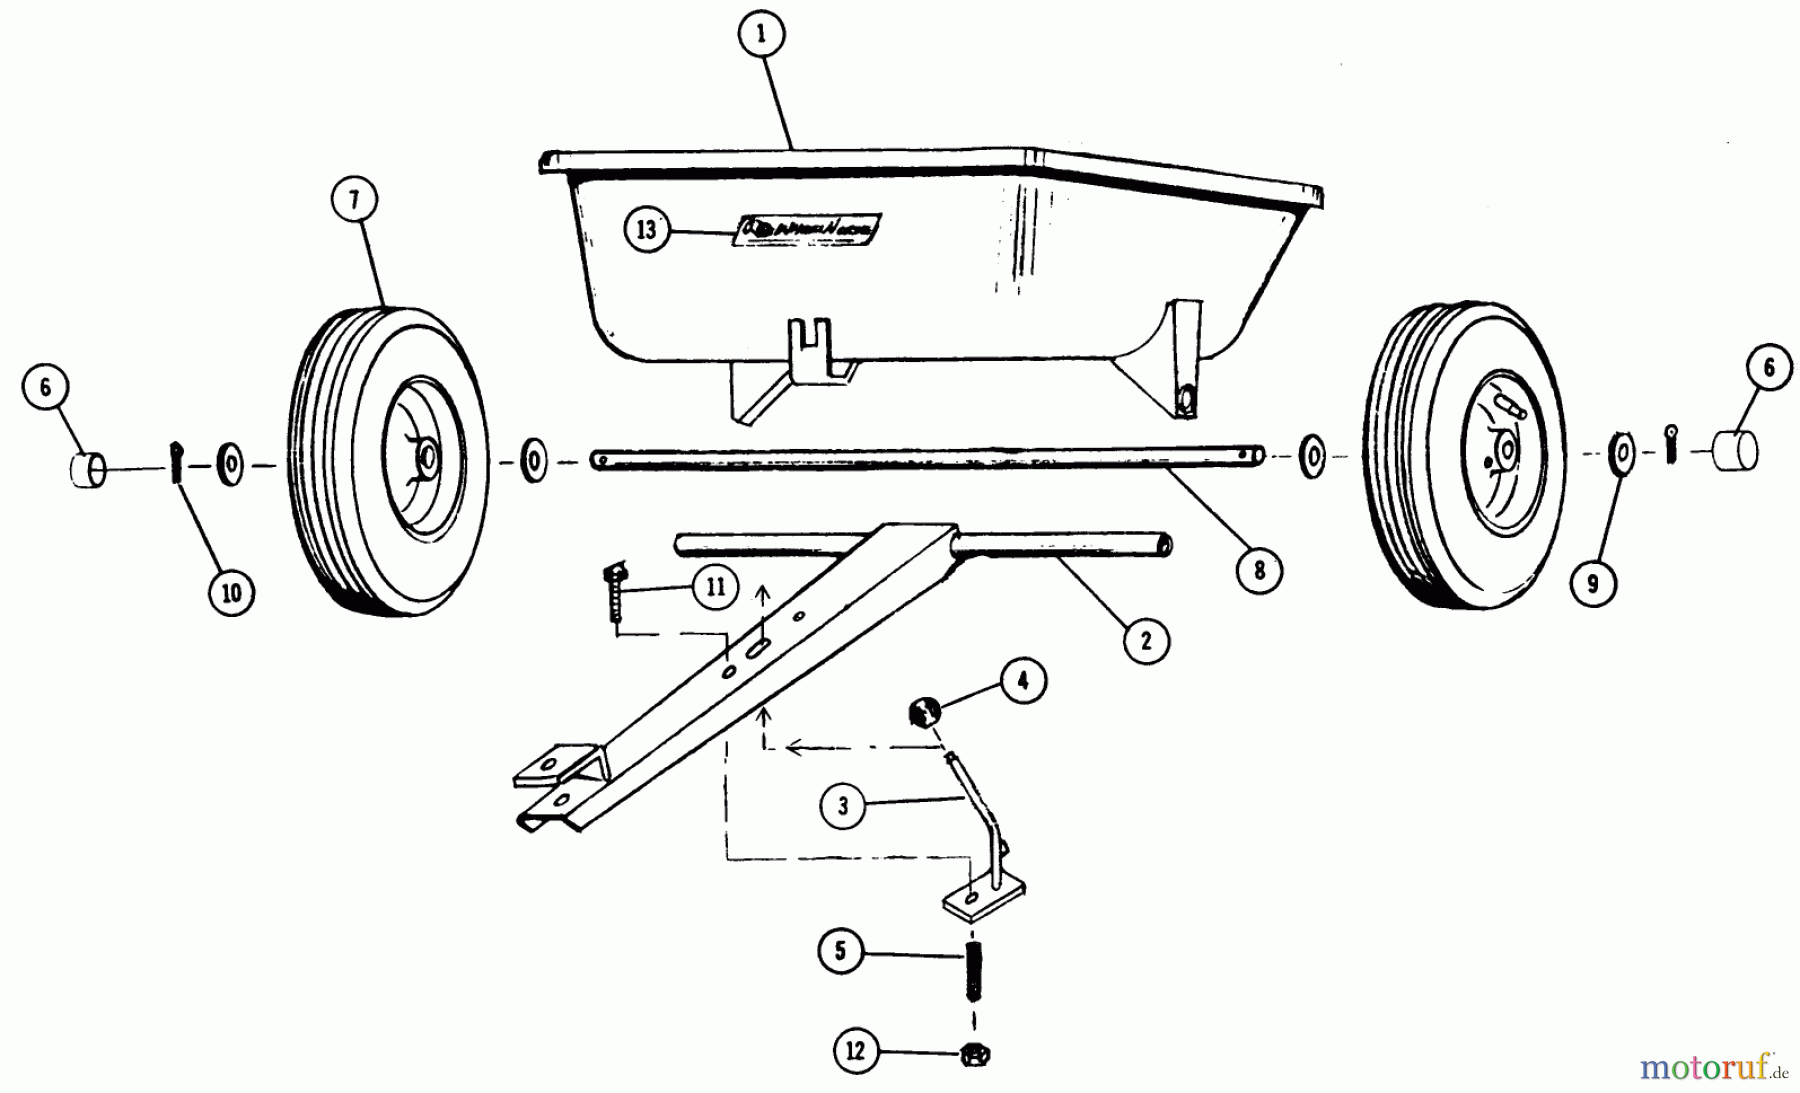  Toro Neu Utility Carts 7-2211 - Toro 2-Wheel Cart, 1974 PARTS LIST-DUMP TRAILER MODEL 7-2211 (FORMERLY LTD-244)